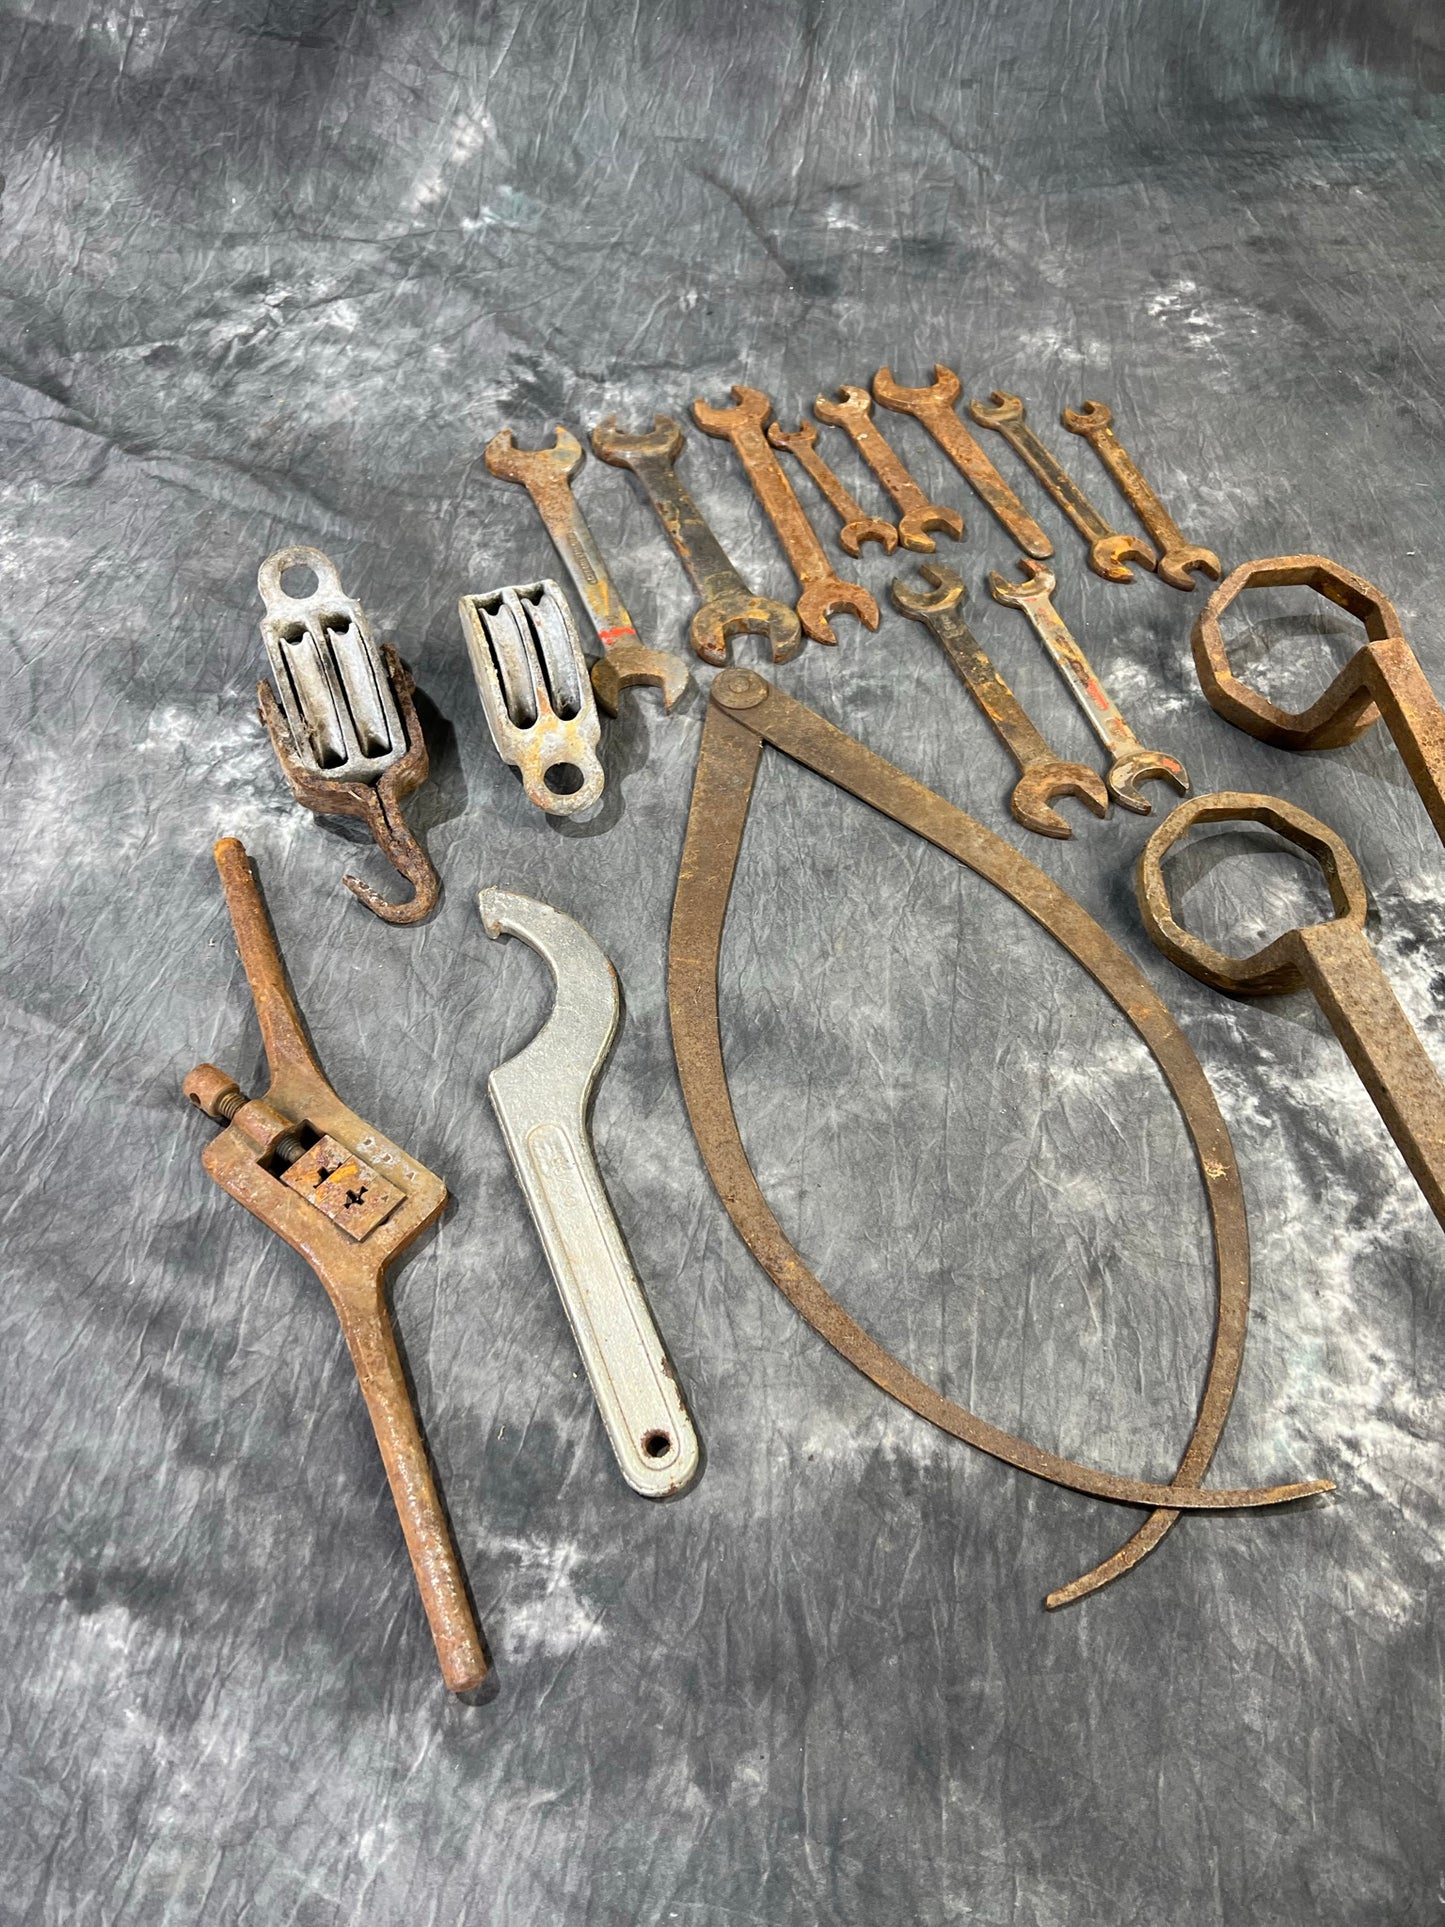 Vintage Garage Workshop Tools JOB LOT - 17x Items Reclaimed Workshop Tools